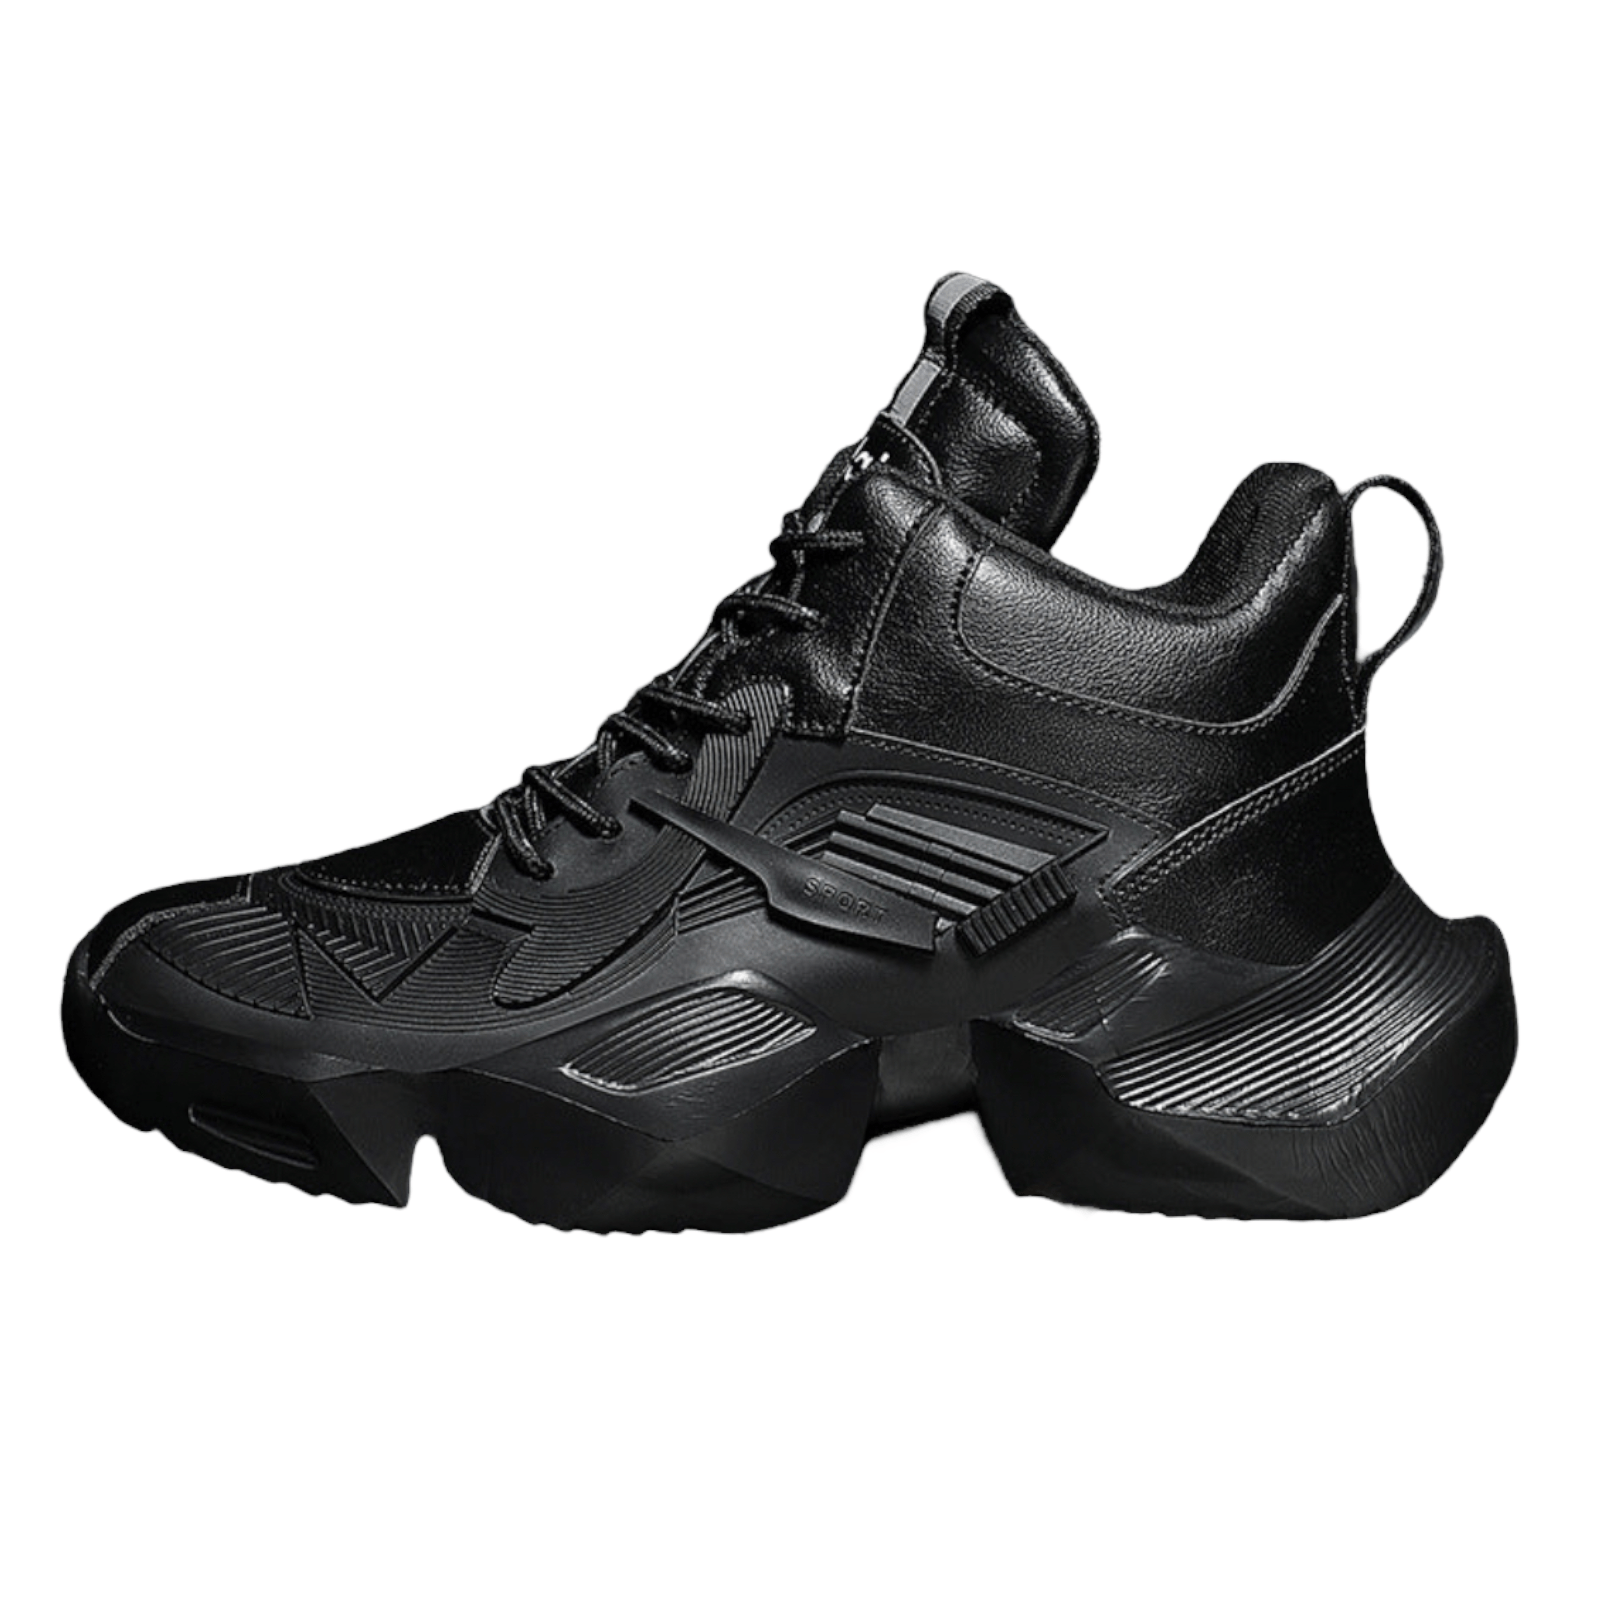 black sneakers aquiles sport flashlander left side